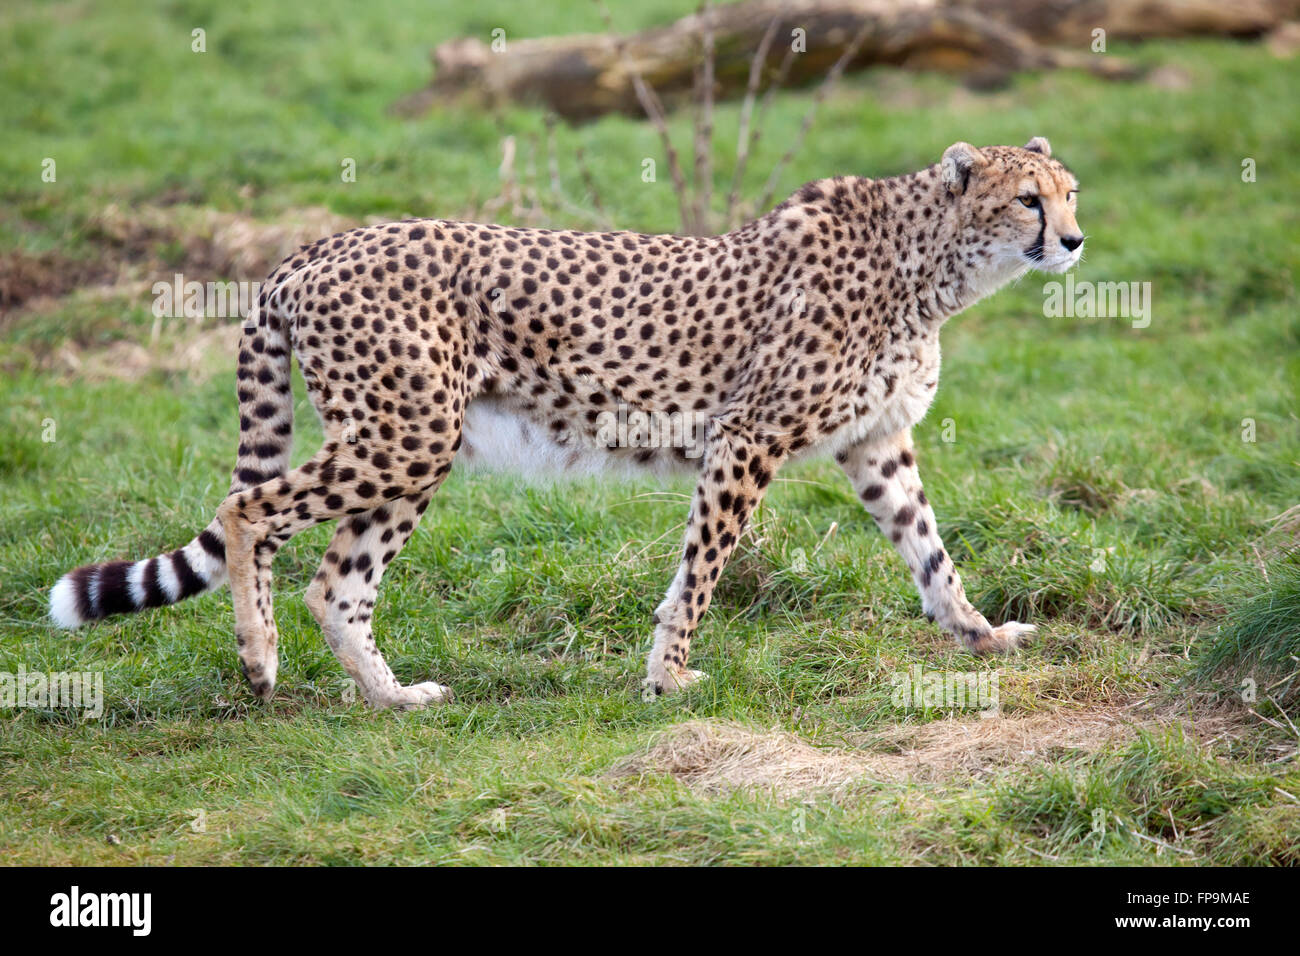 A single Cheetah walking on some grassland Stock Photo